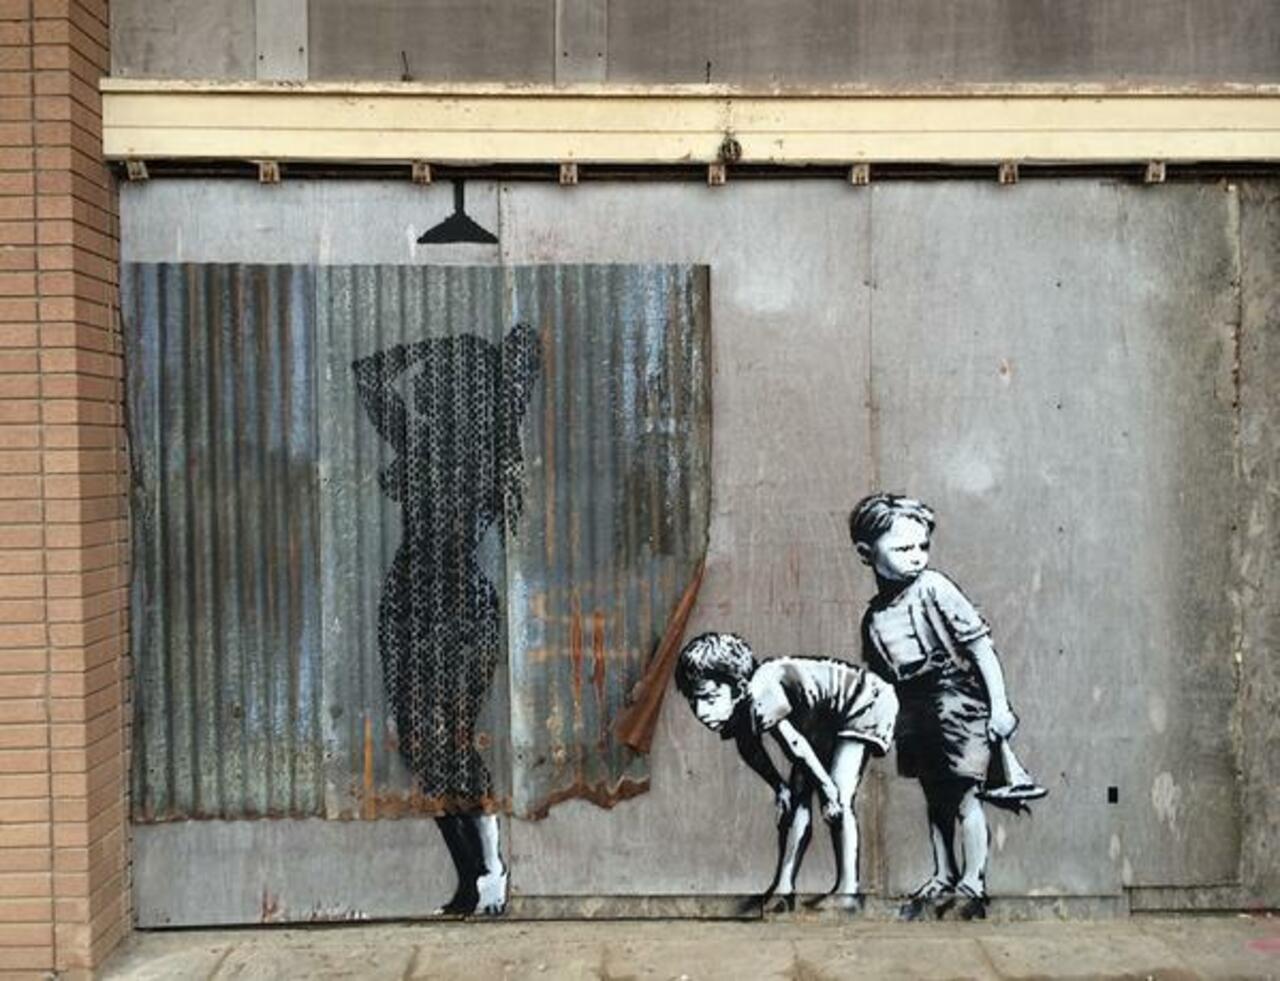 RT @upbyartists: BANKSY 
#banksy #graffiti #illustrator #streetart #wow #art http://t.co/M7O0xFiIFW